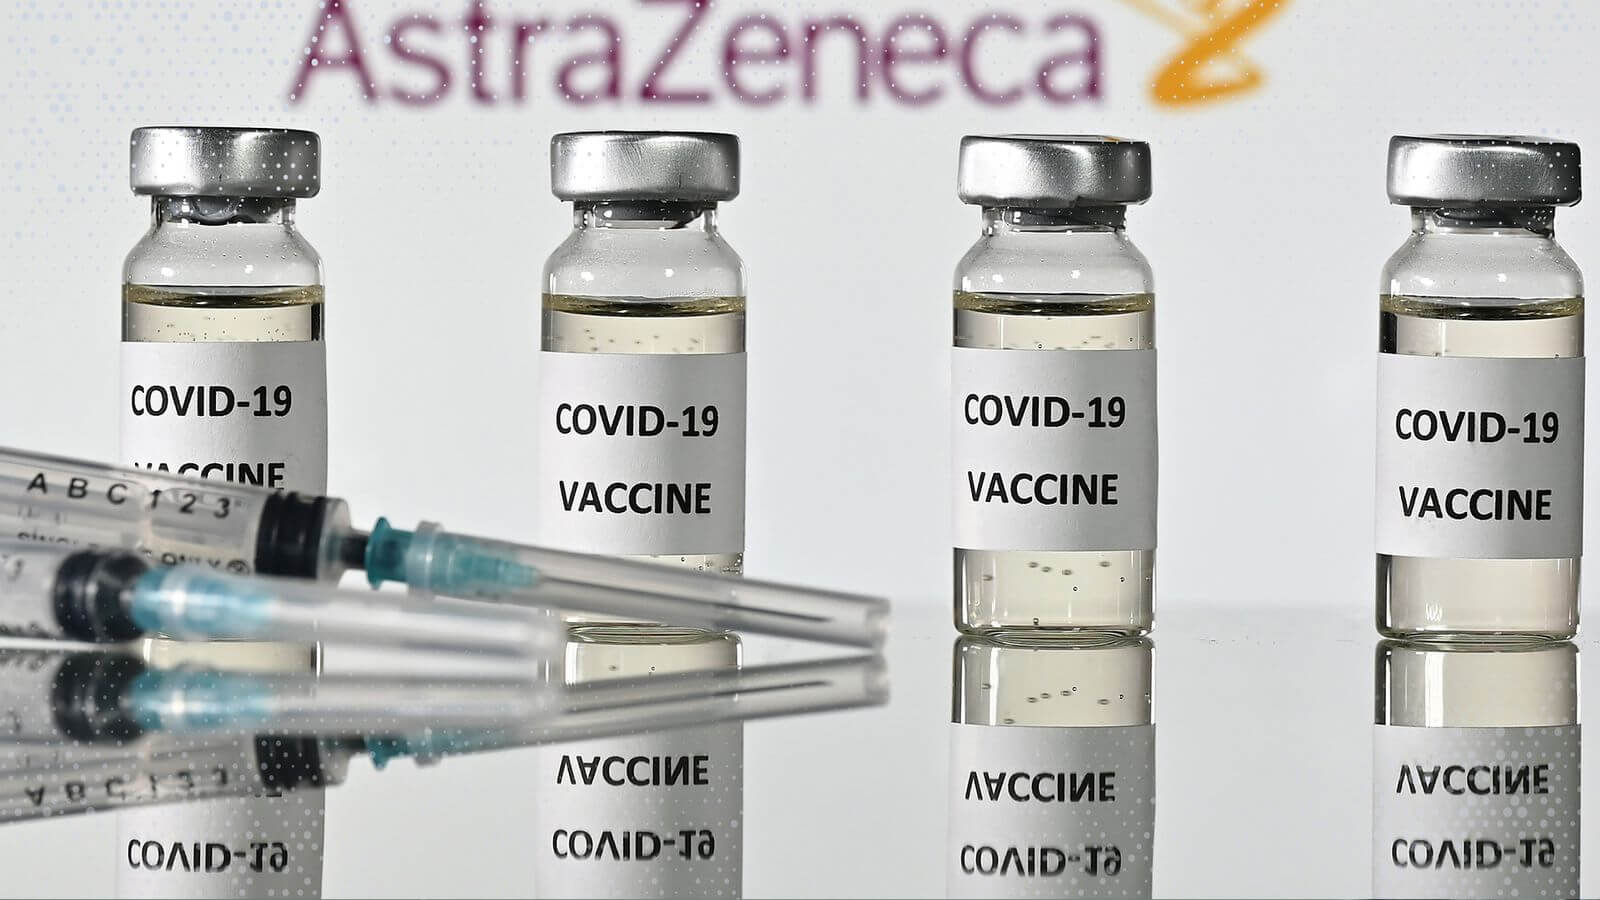 astrazenecainitiatesglobalwithdrawalofcovid19vaccine